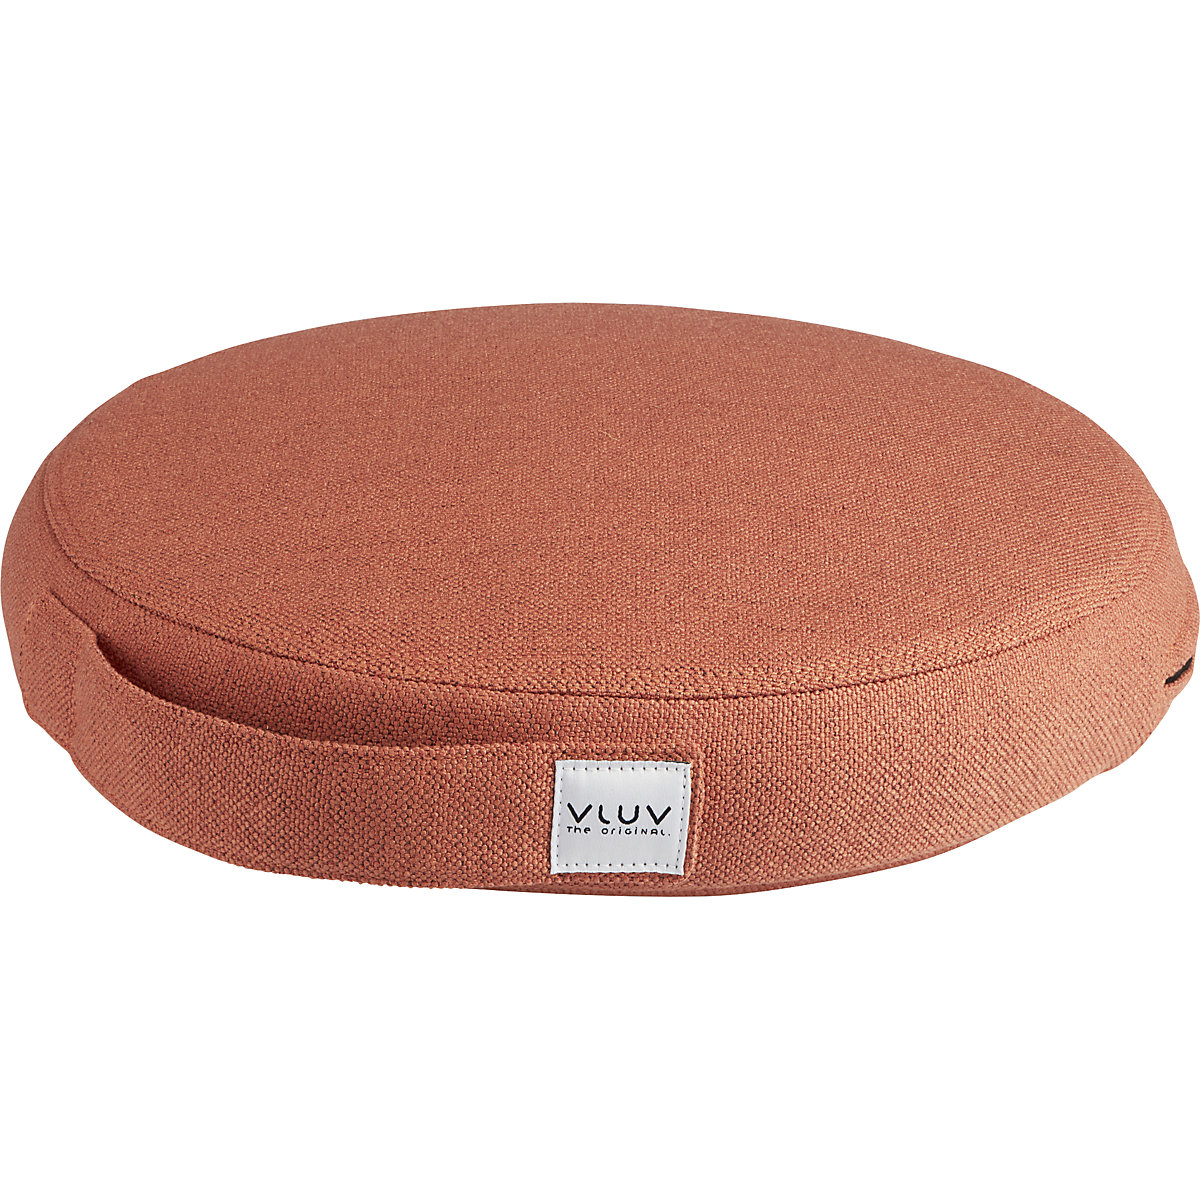 Jastuk za ravnotežu PIL&PED SOVA – VLUV, s tekstilnom presvlakom, Ø 360 mm, u losos narančastoj boji-12